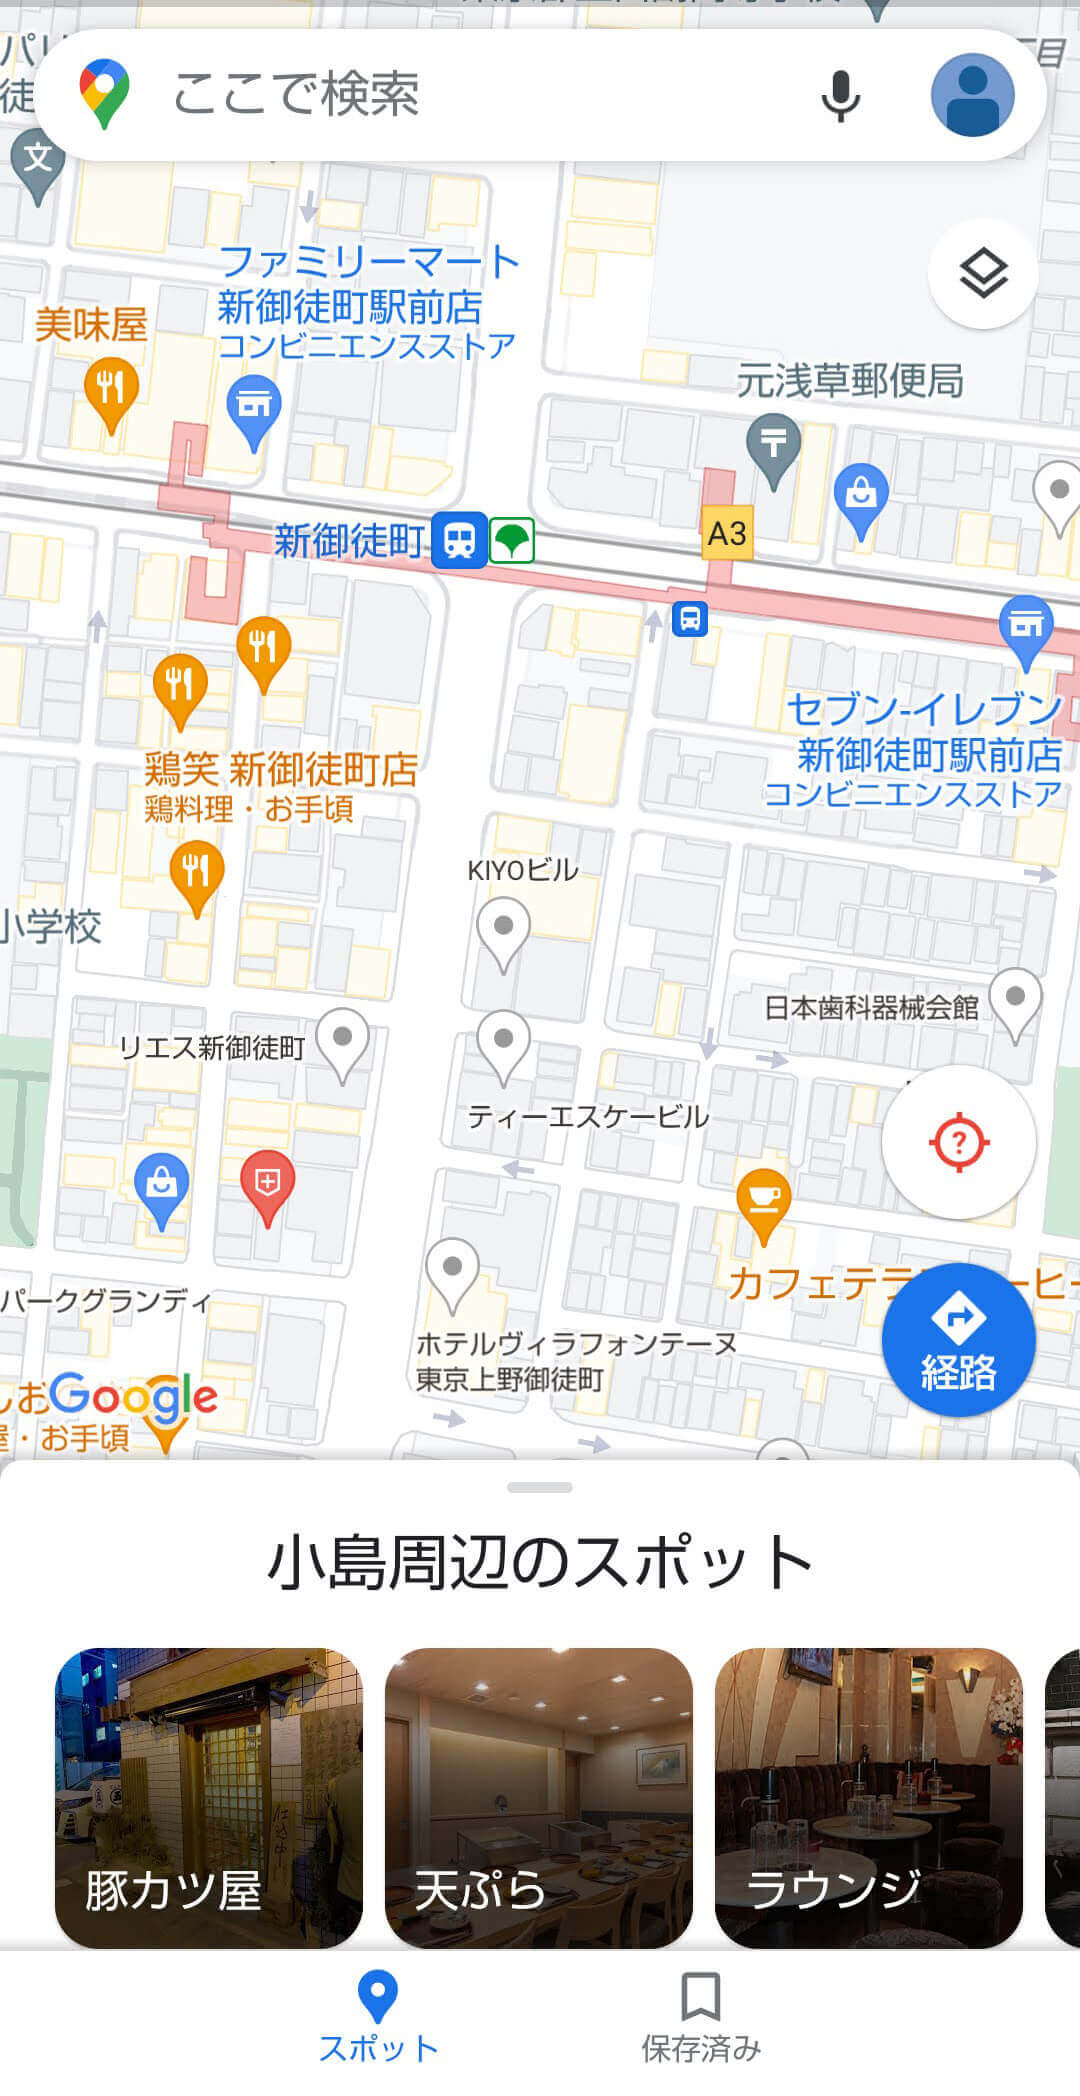 Google マップのスクショ画像